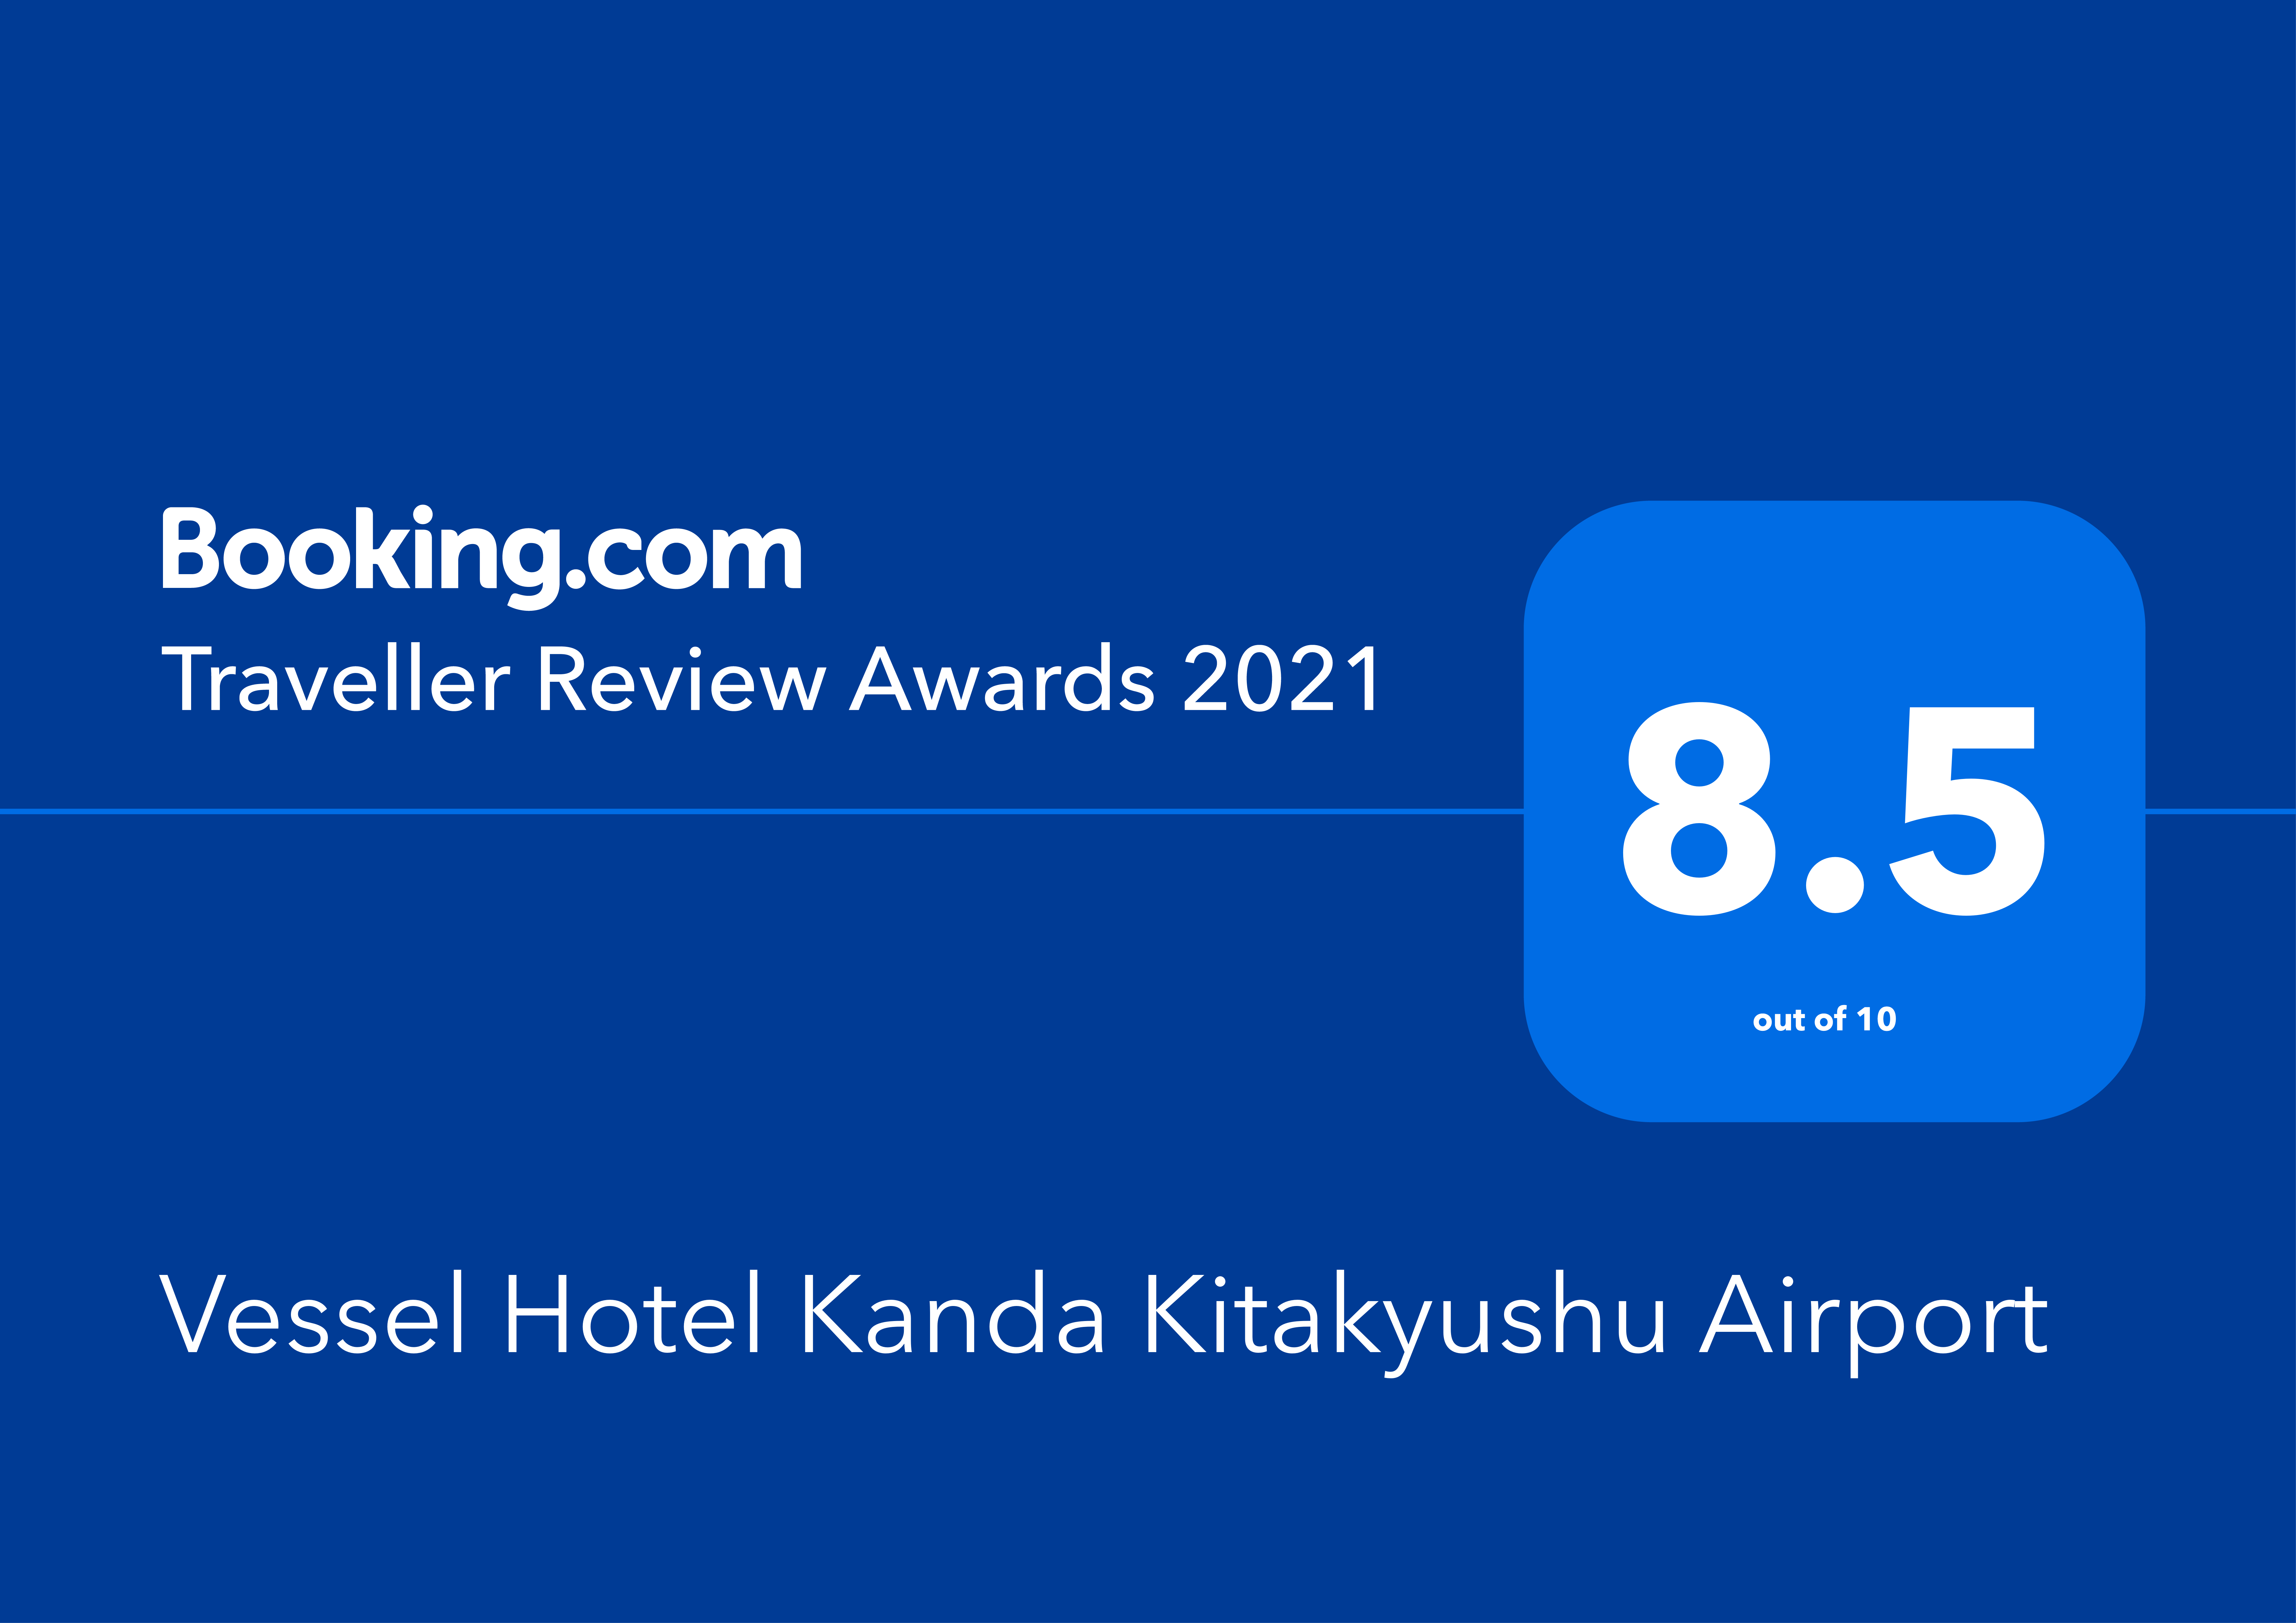 Booking.com“ 2021年旅行者评论奖”获得者